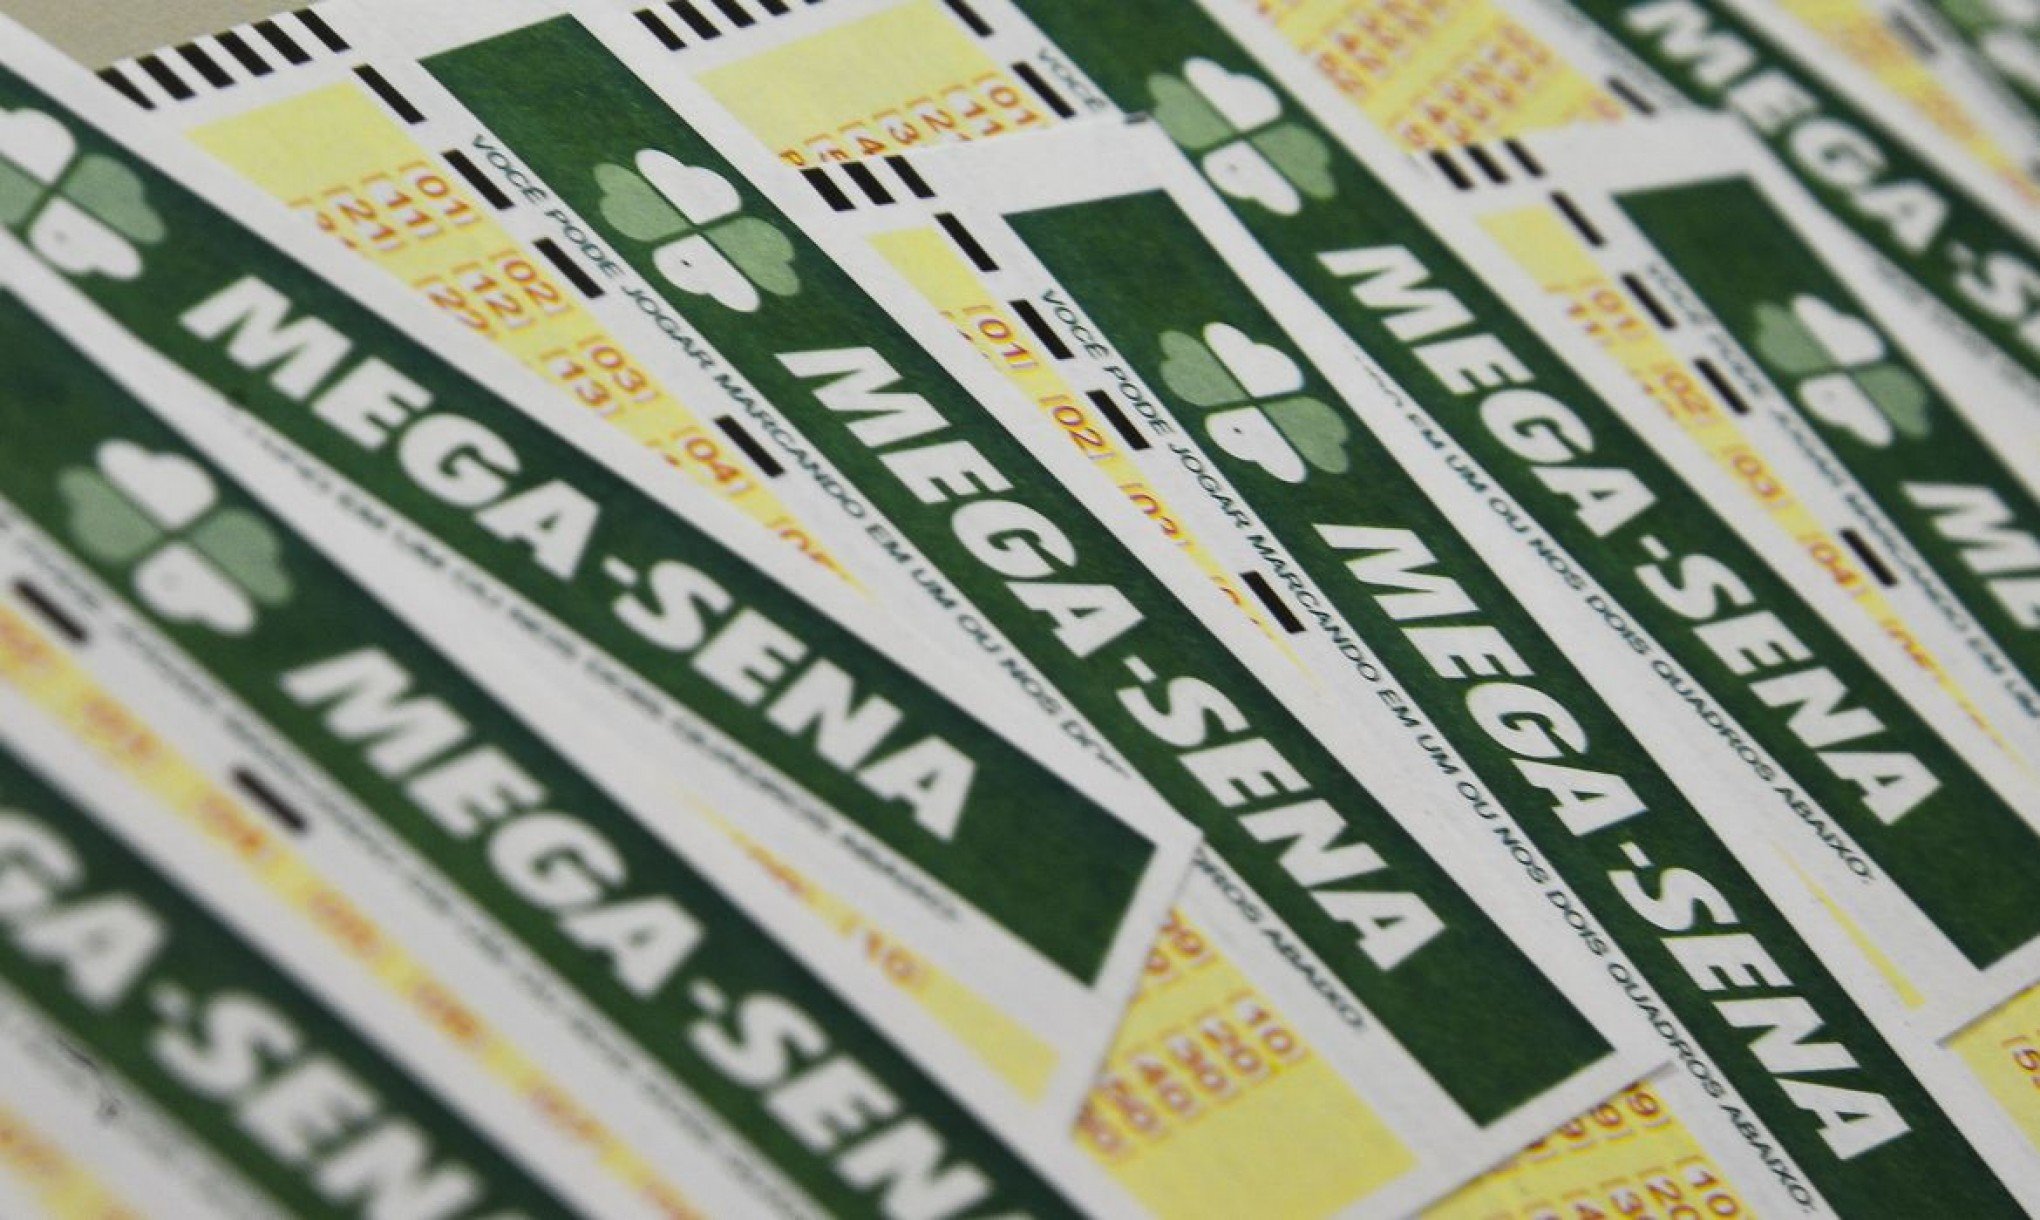 LOTERIAS: Mega-Sena sorteio prêmio de R$ 110 milhões neste sábado